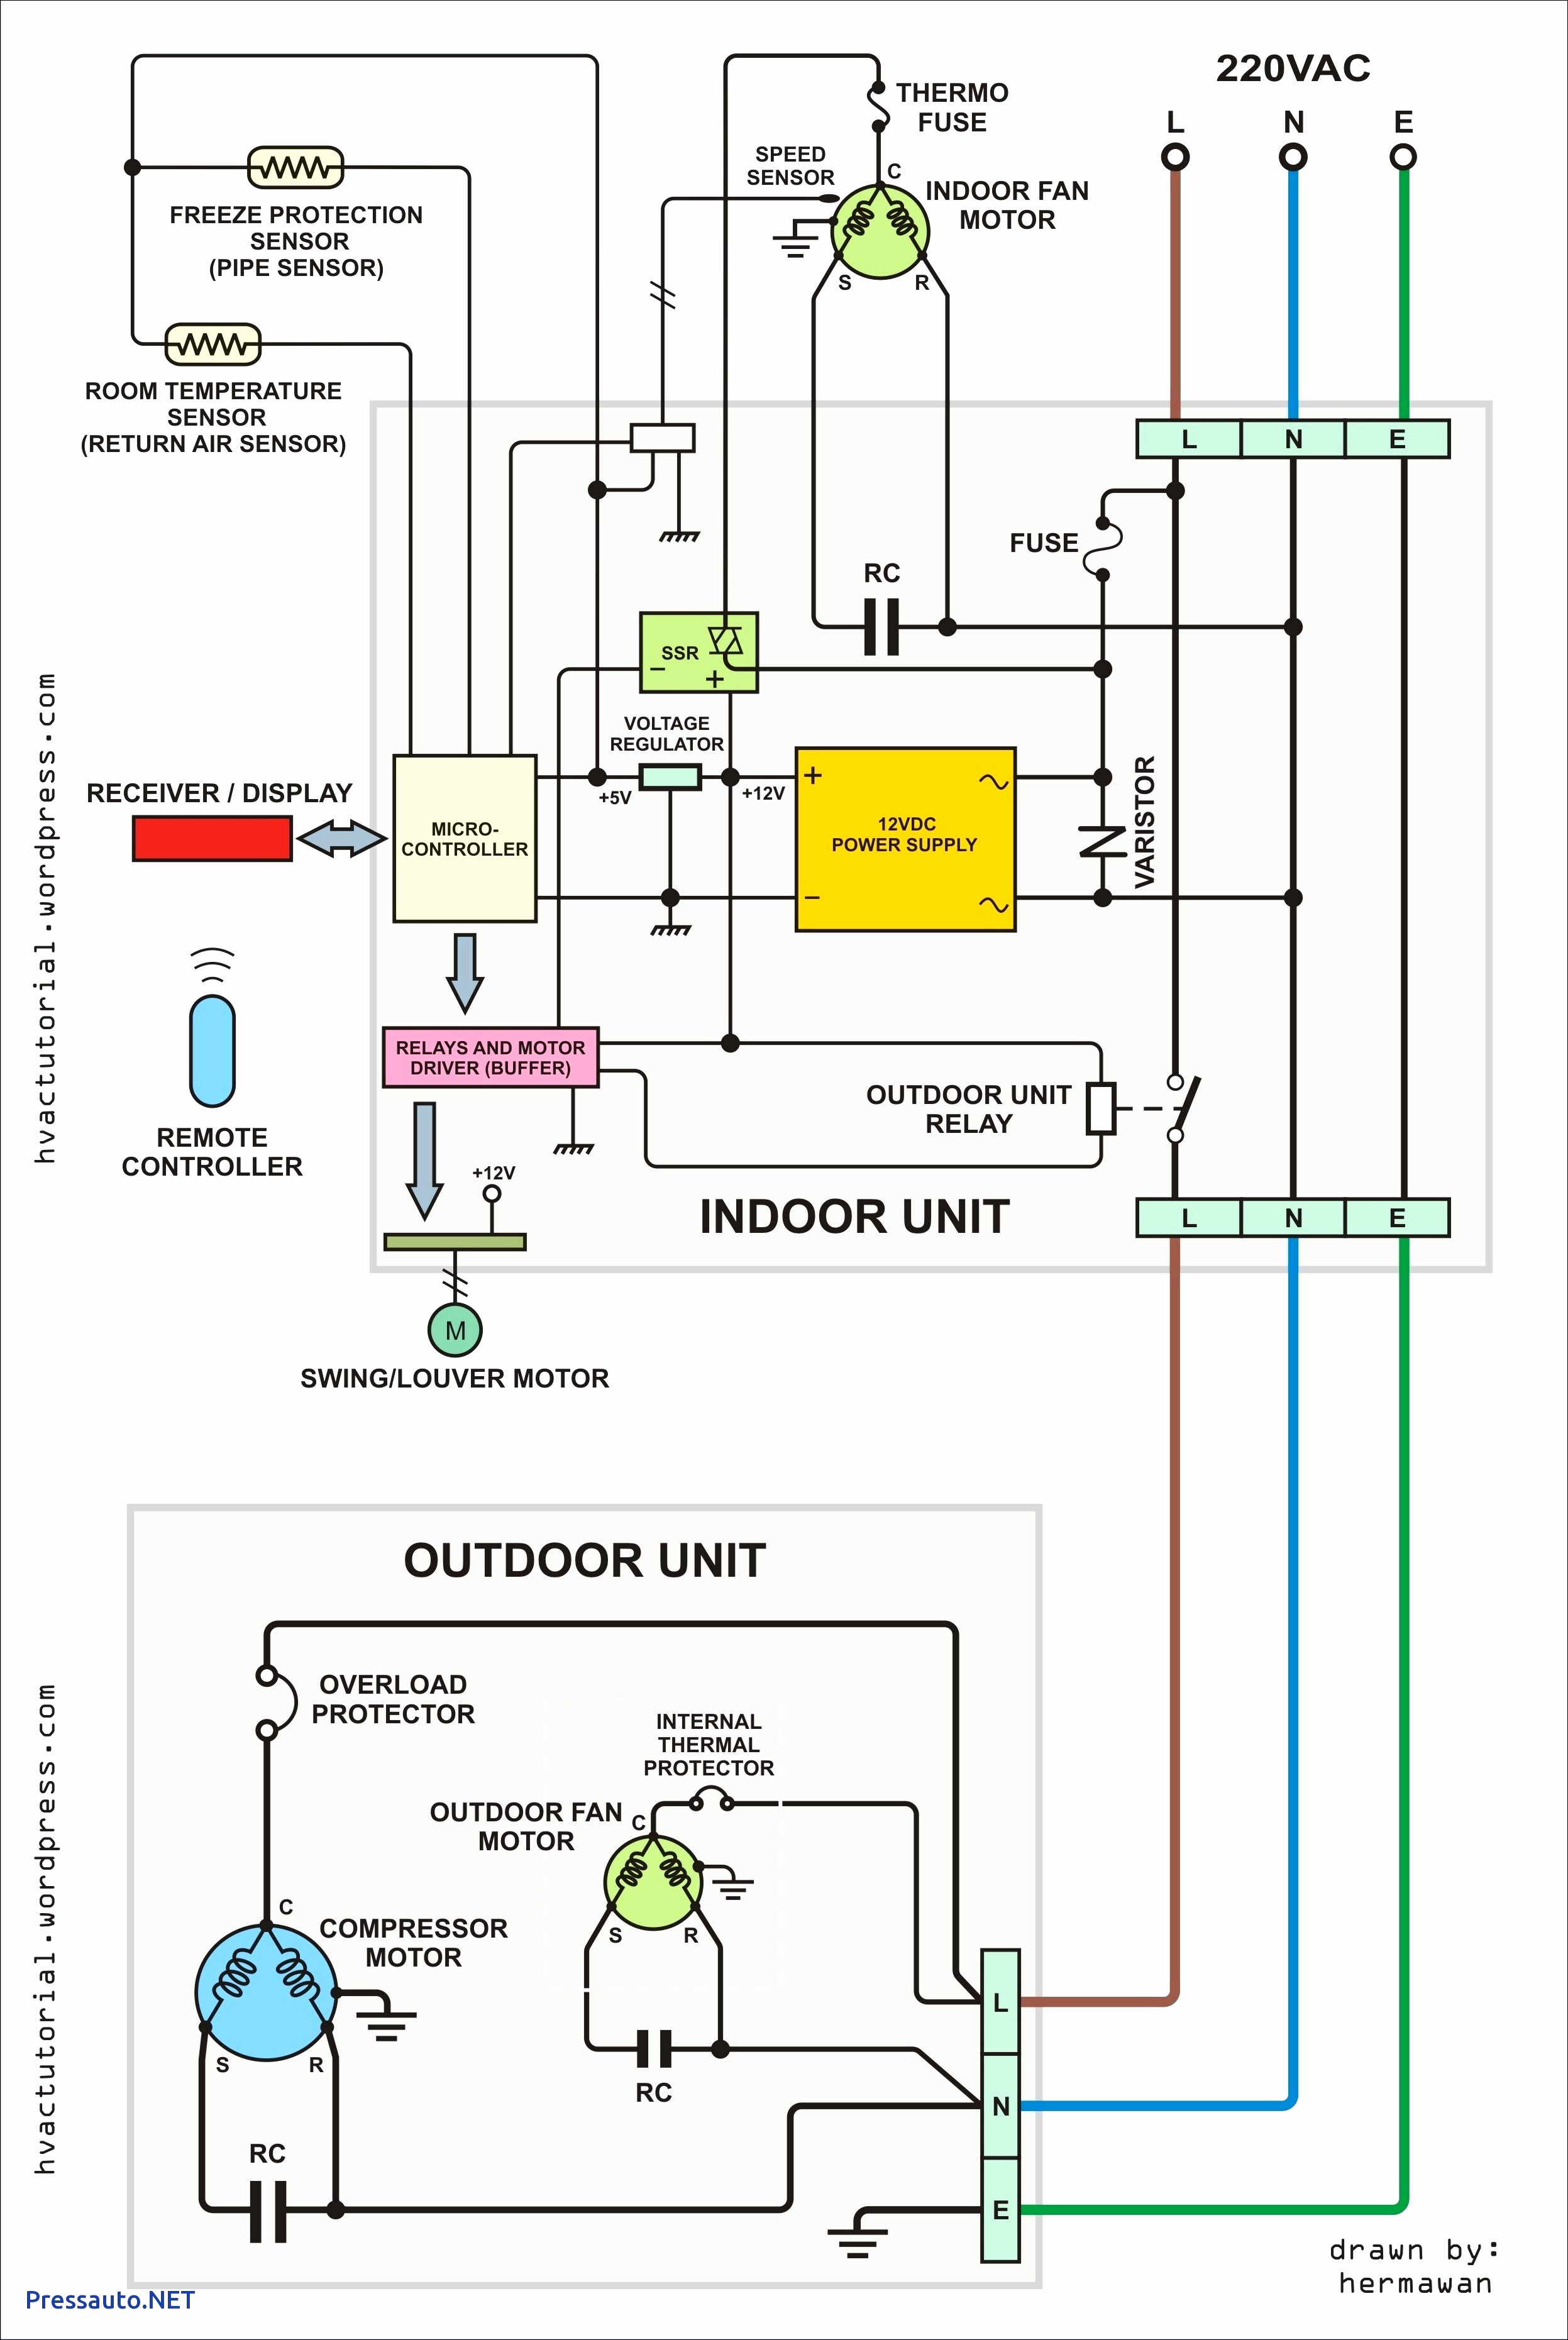 Jayco Trailer Wiring Diagram | Wiring Diagram - Jayco Trailer Wiring Diagram